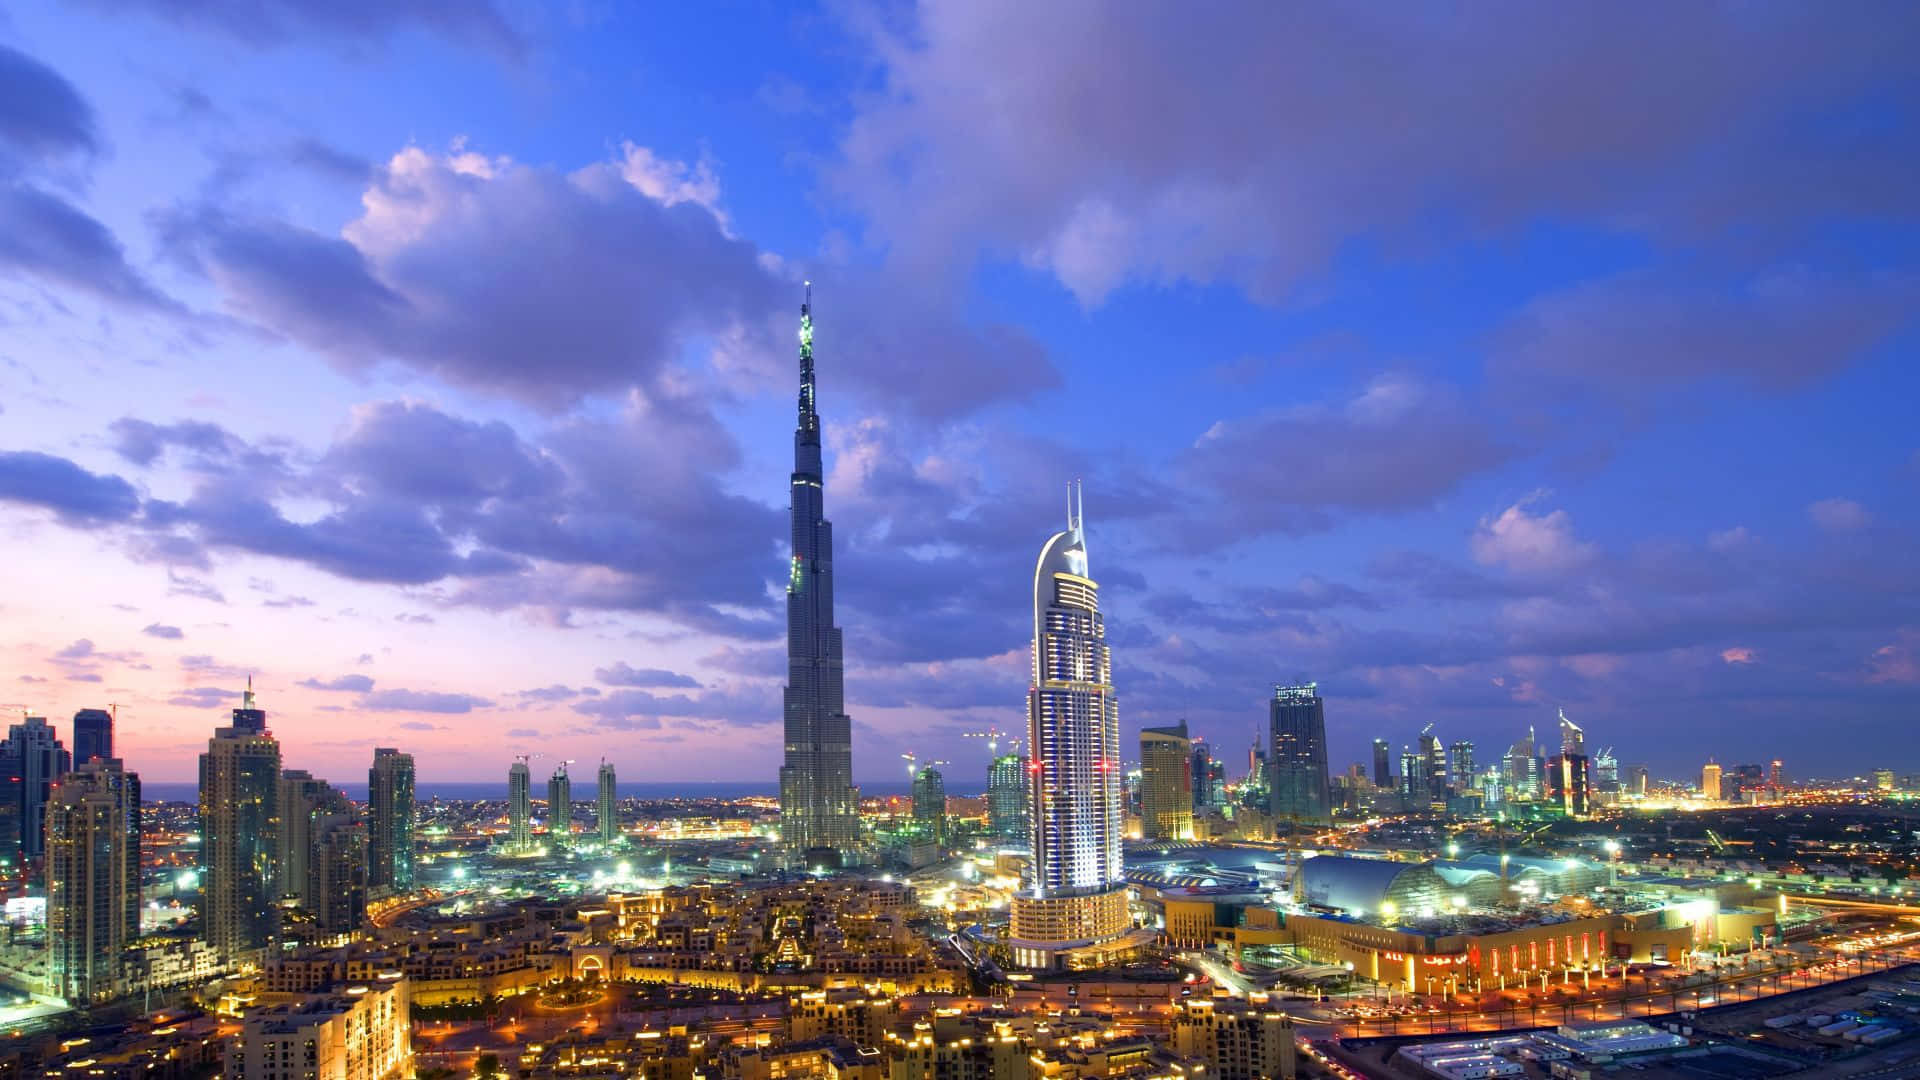 Majestic Burj Khalifa Illuminated Against a Night Sky